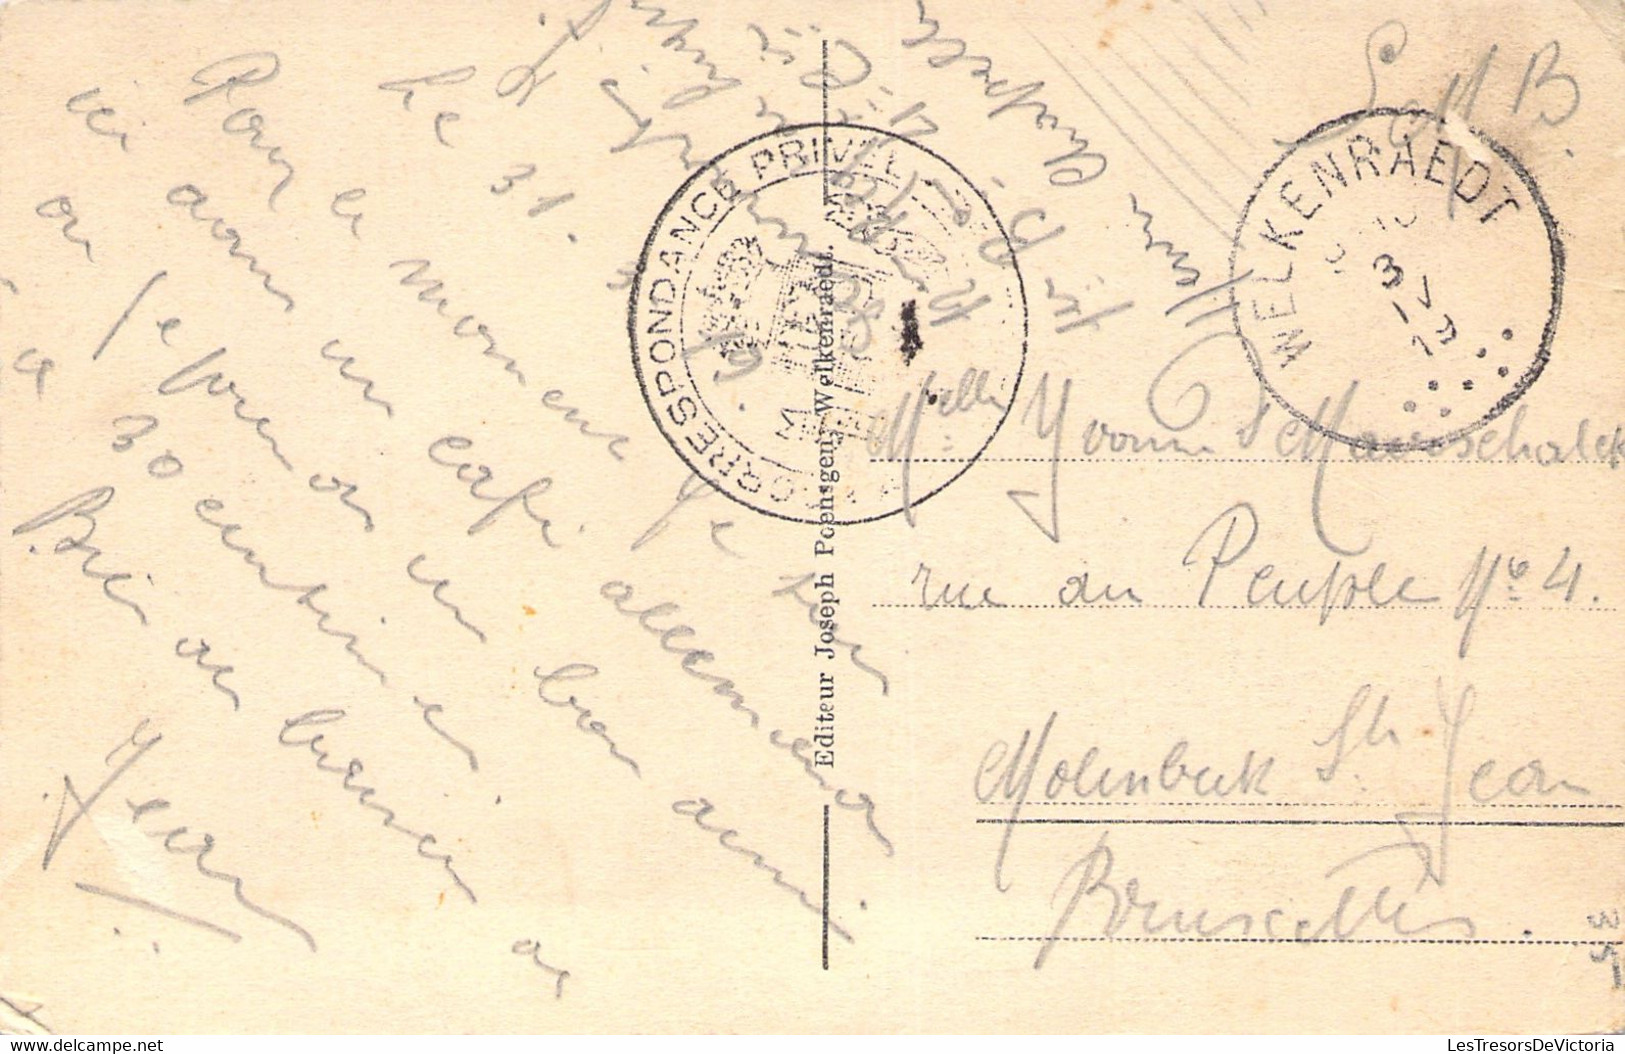 Welkenraedt - Rue Lamberts - Franchise Militaire Cachet Correspondance Privée - Oblitération 1919 - Welkenraedt